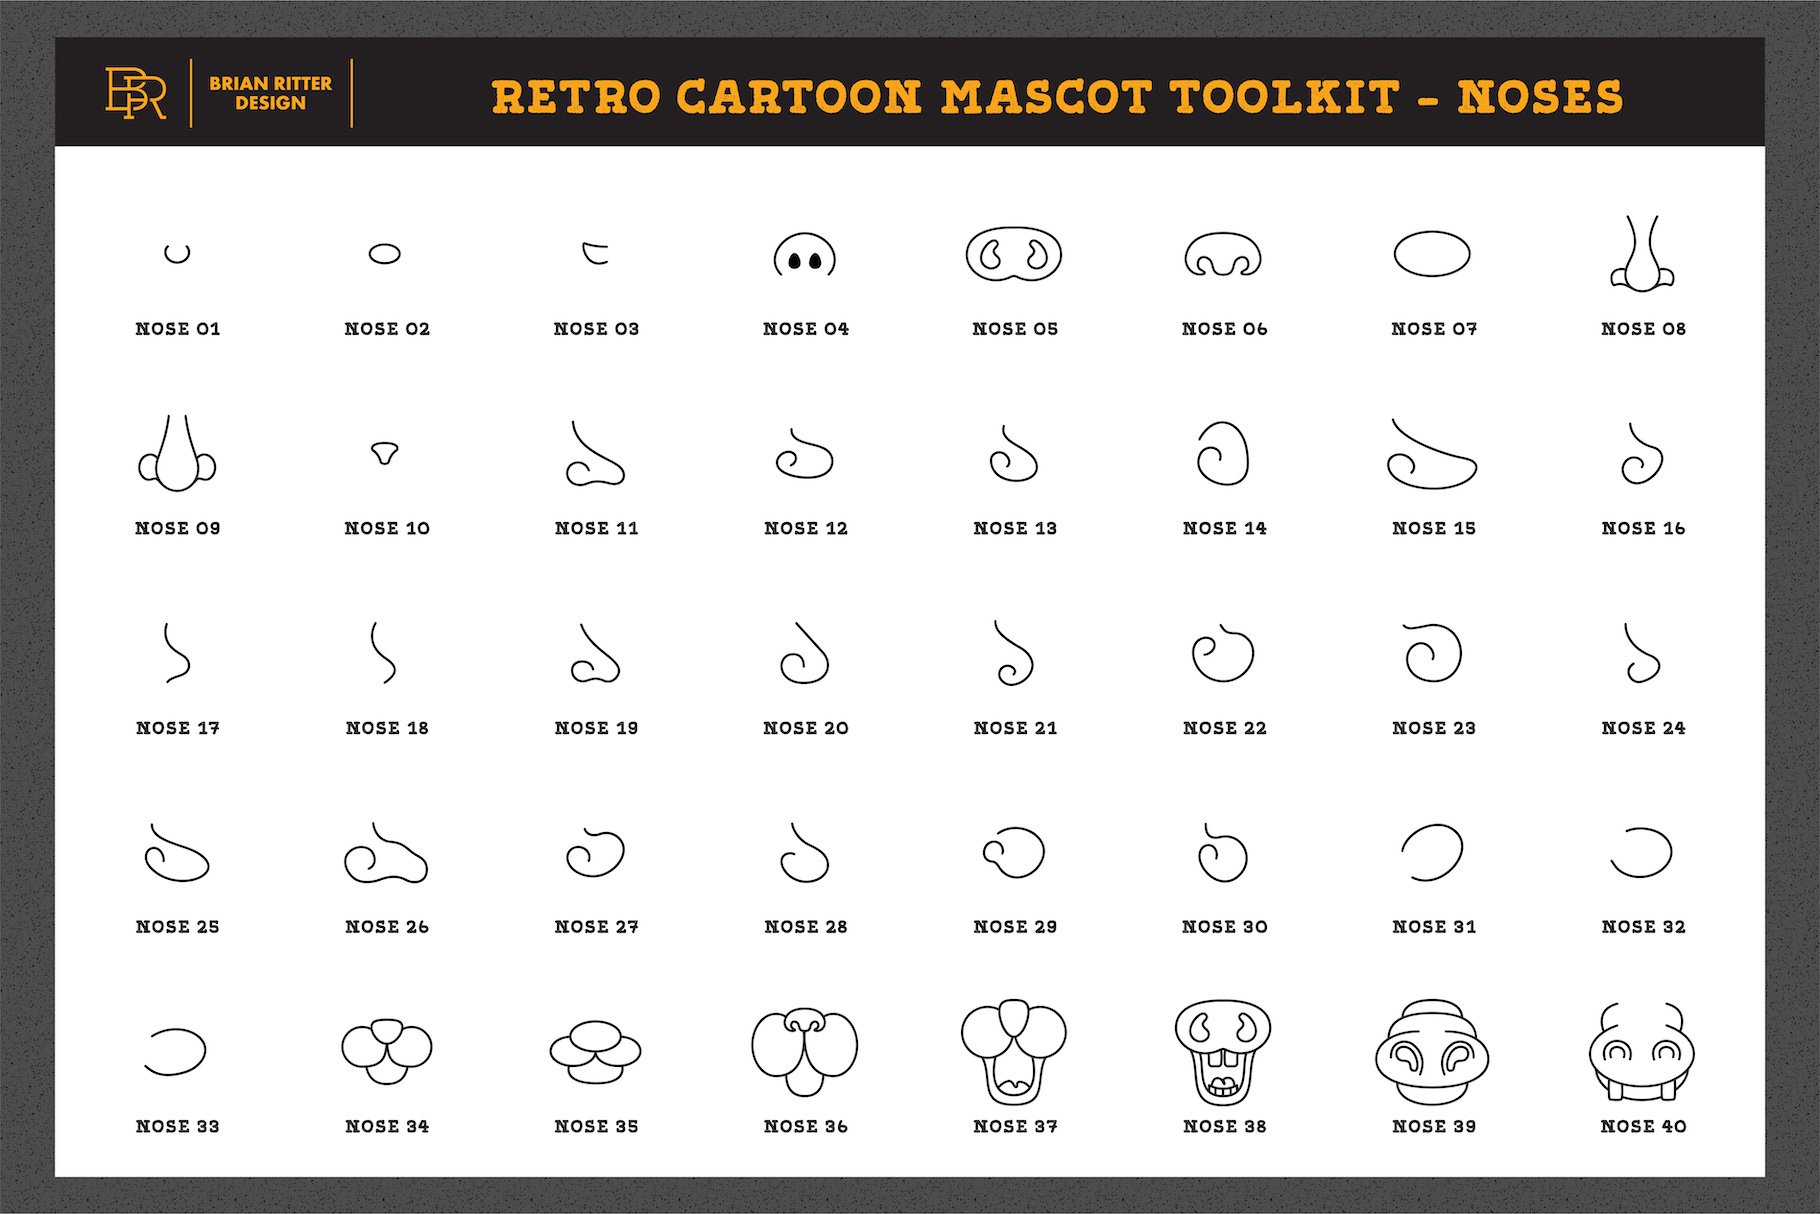 Retro cartoon mascot toolkit - noses.